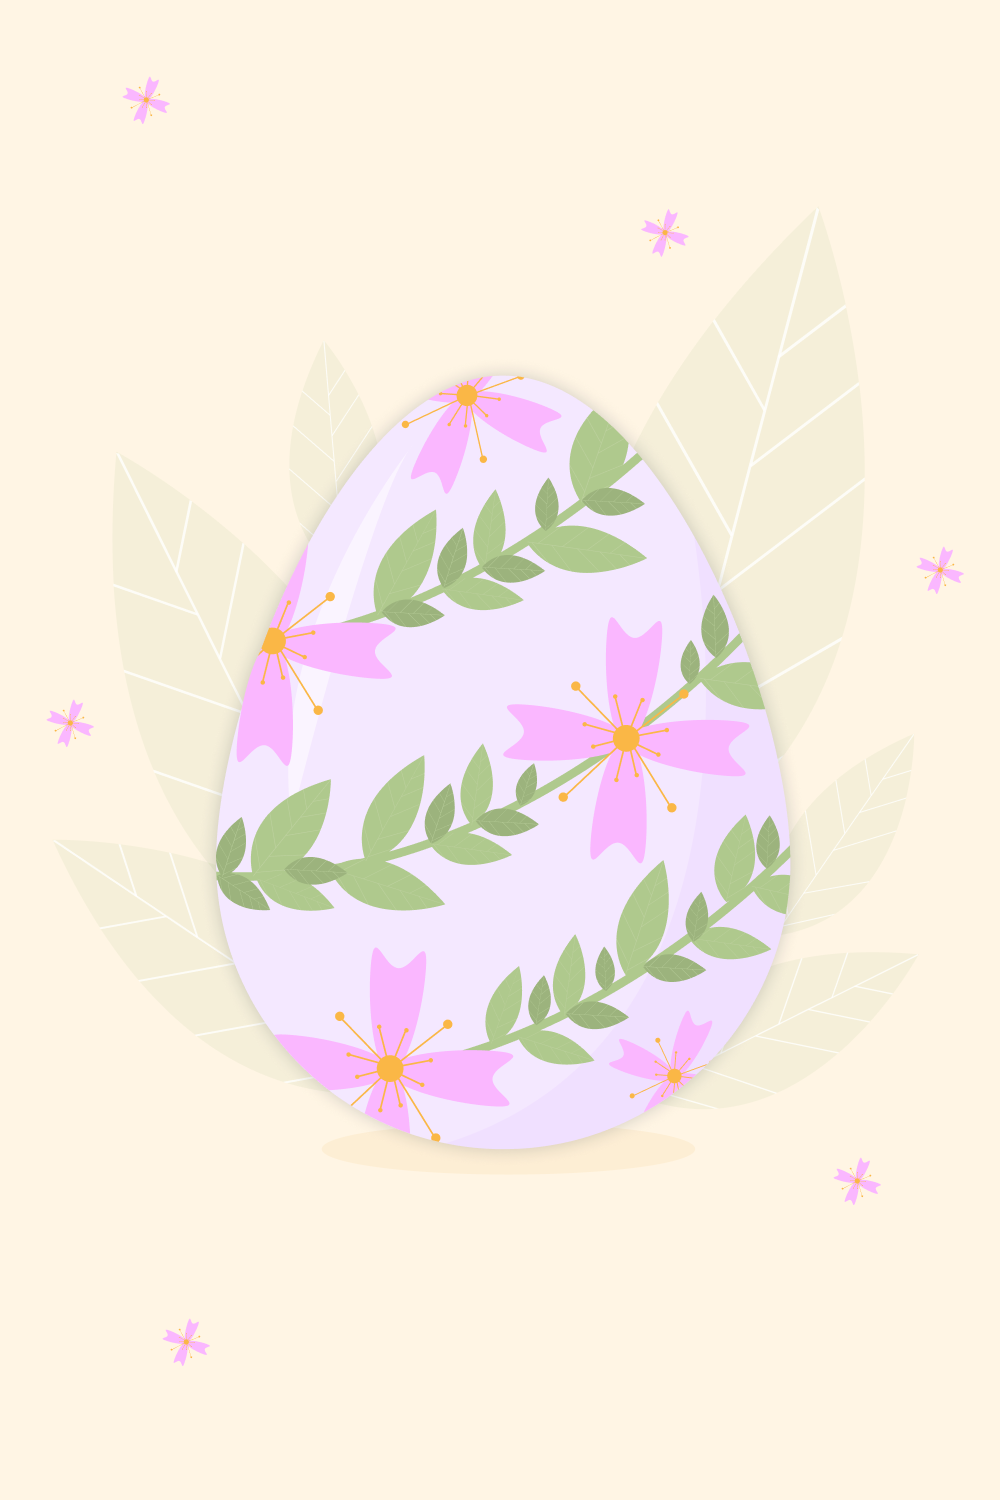 Free Easter Egg SVG in Pastel Colors pinterest.